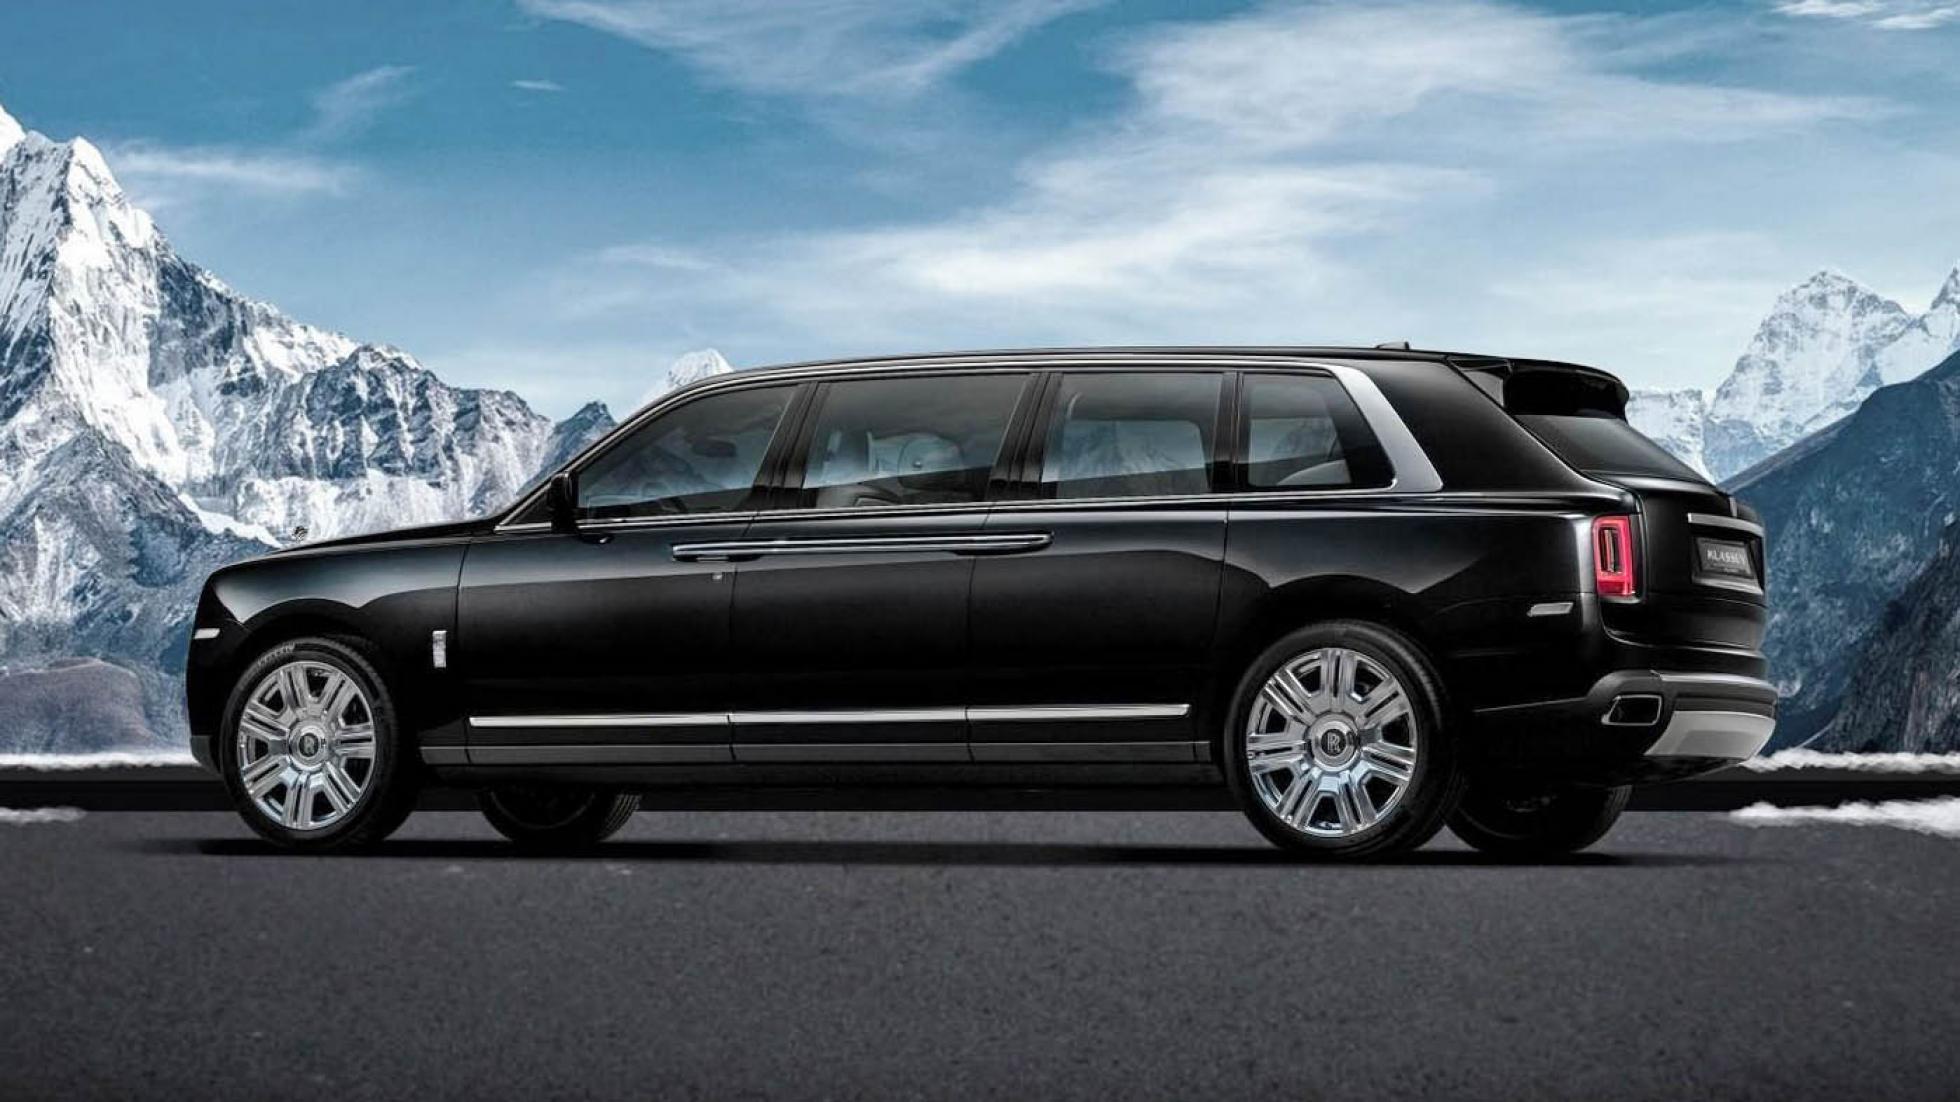 Berita, Rolls-Royce Cullinan Limousine belakang: Rolls-Royce Hadirkan Limousin Cullinan Anti-Peluru Seharga 2 Juta Dollar